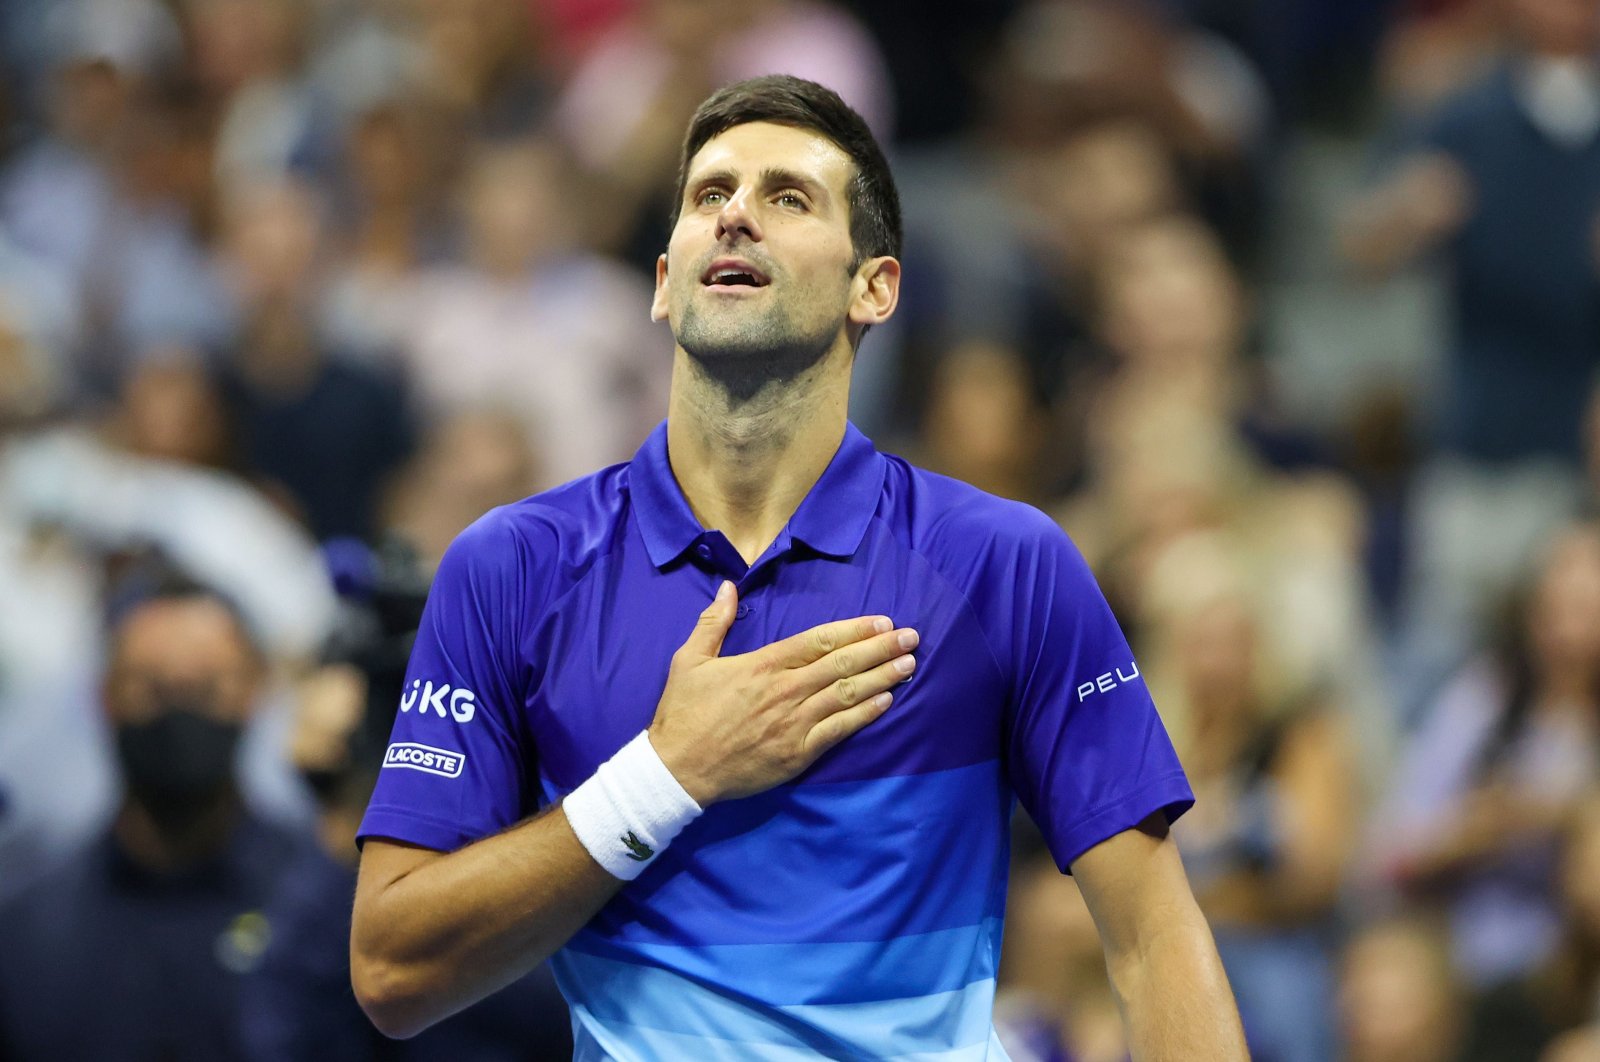 Serbia's Novak Djokovic celebrates after defeating the Netherland's Tallon Griekspoor in the U.S. Open men's singles second round, New York, U.S., Sept. 02, 2021. (AFP Photo)